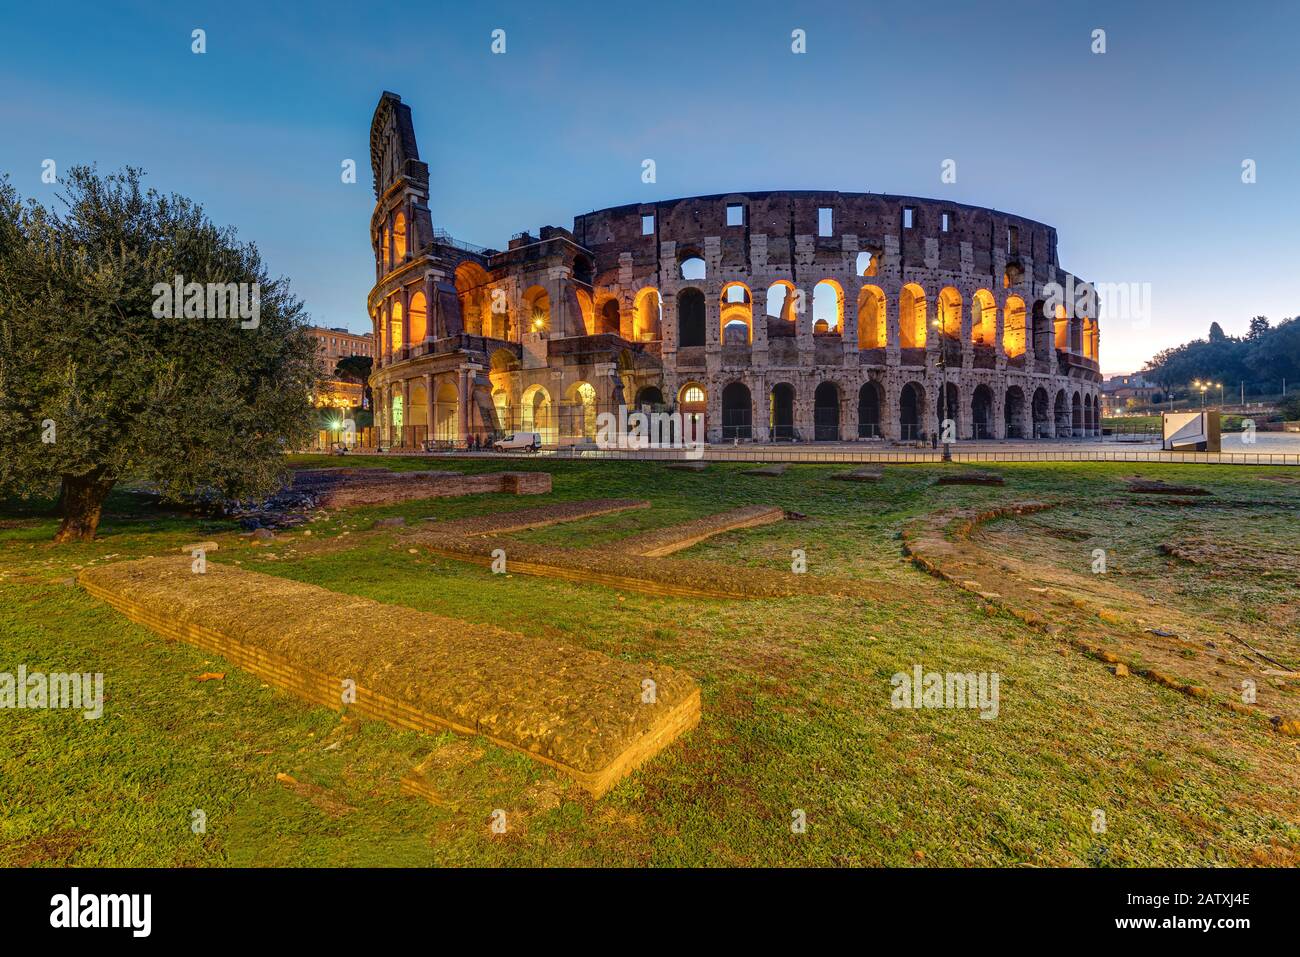 The illuminated Colosseum in Rome before sunrise Stock Photo